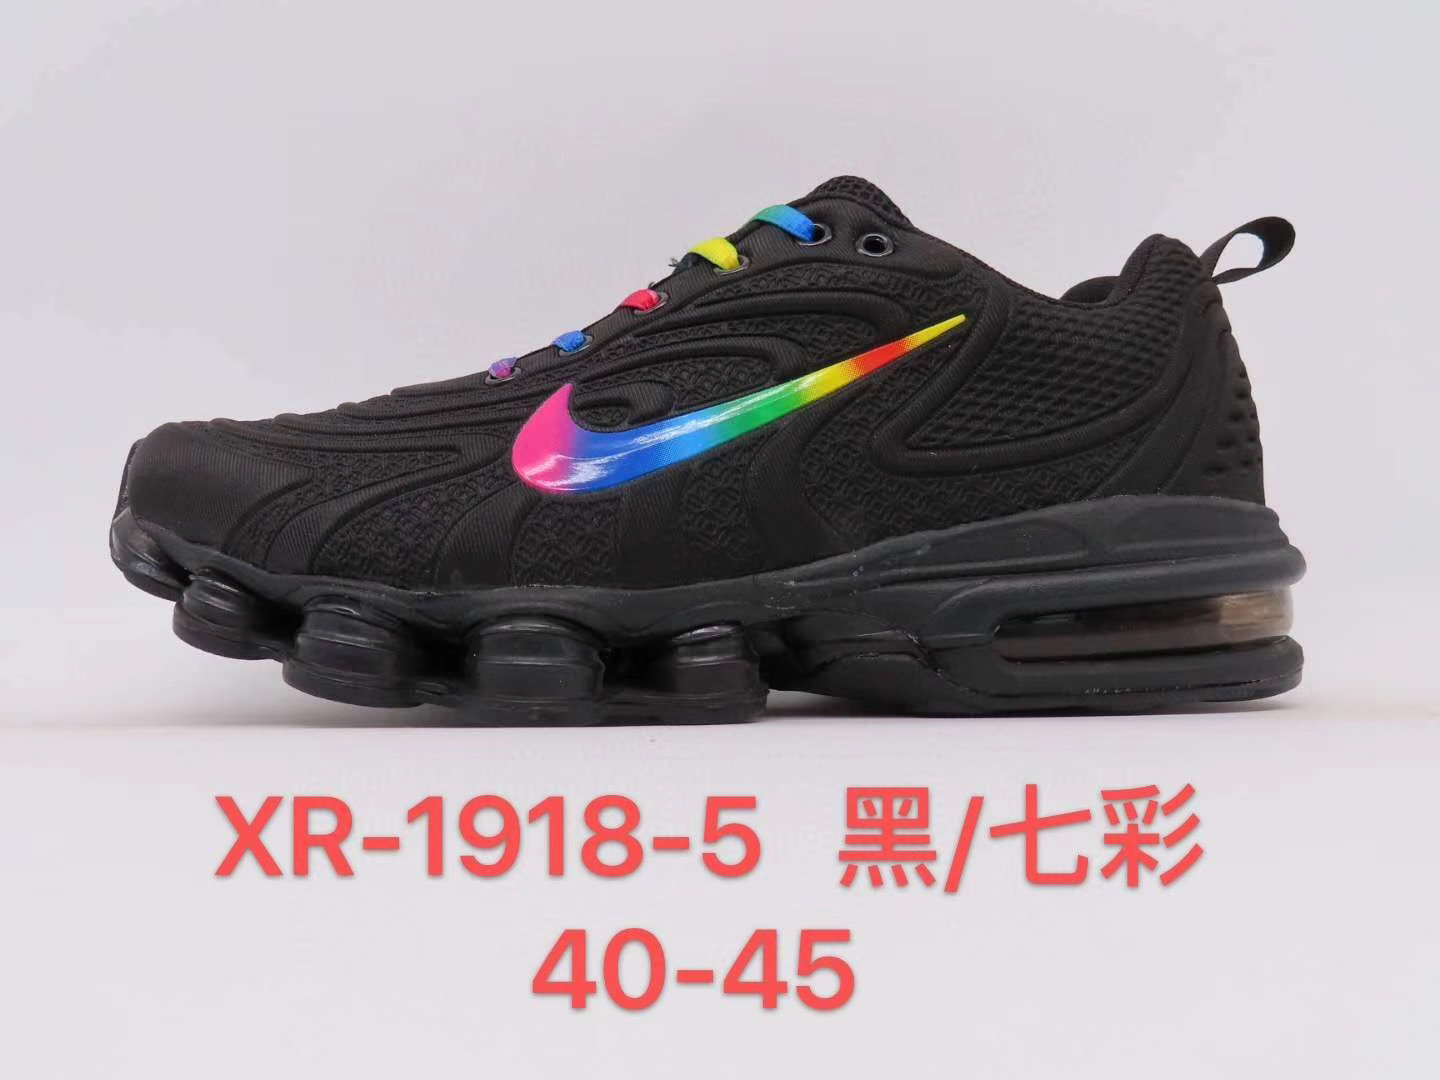 Nike Air Max 2019.6 Voyager Black Rainbow Shoes